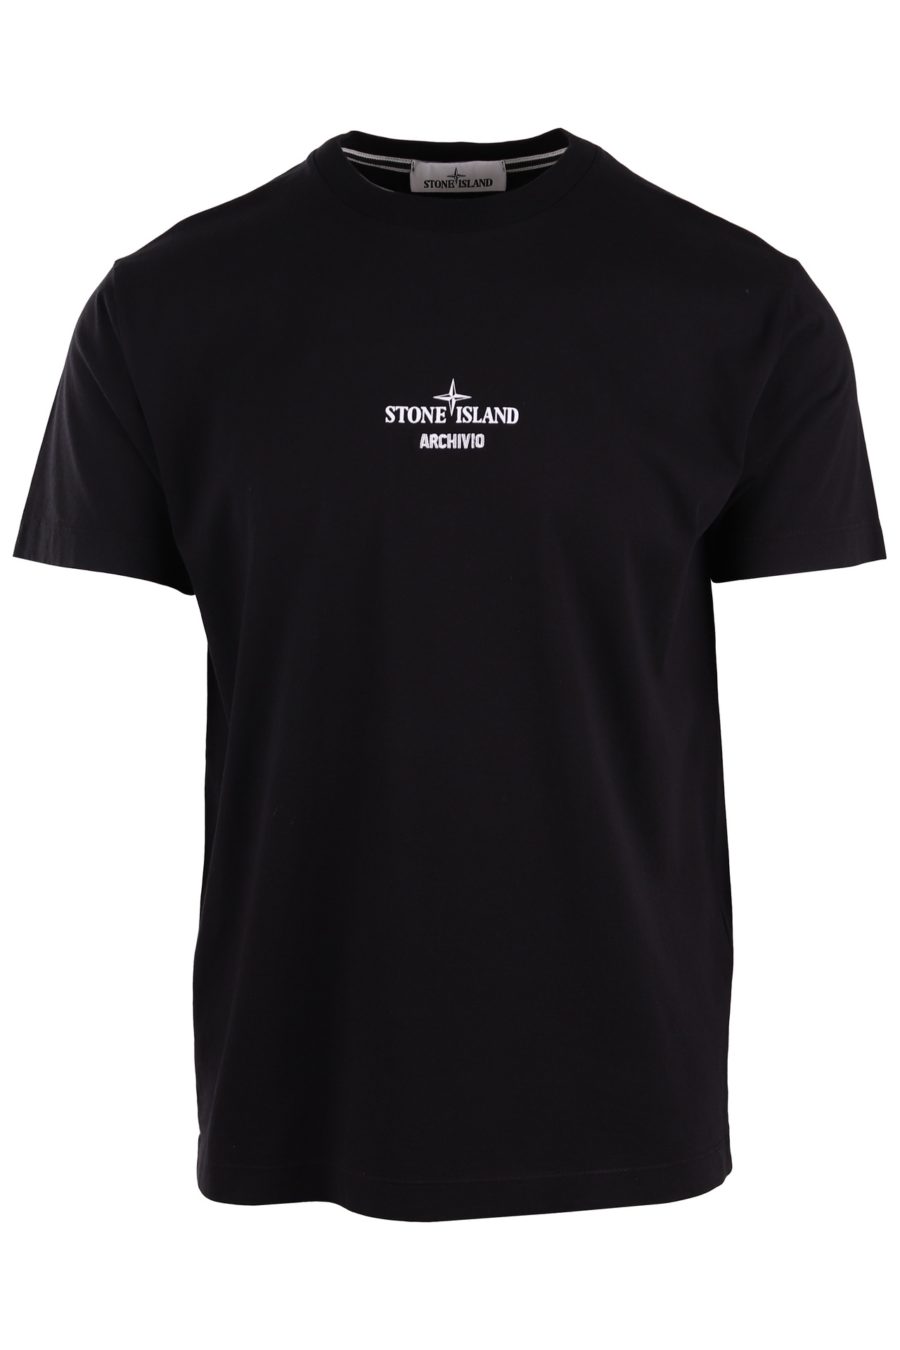 T-shirt Stone Island schwarz mit Logo "archivio" - 1973d037007b1329f76e48264457effc91aeb215